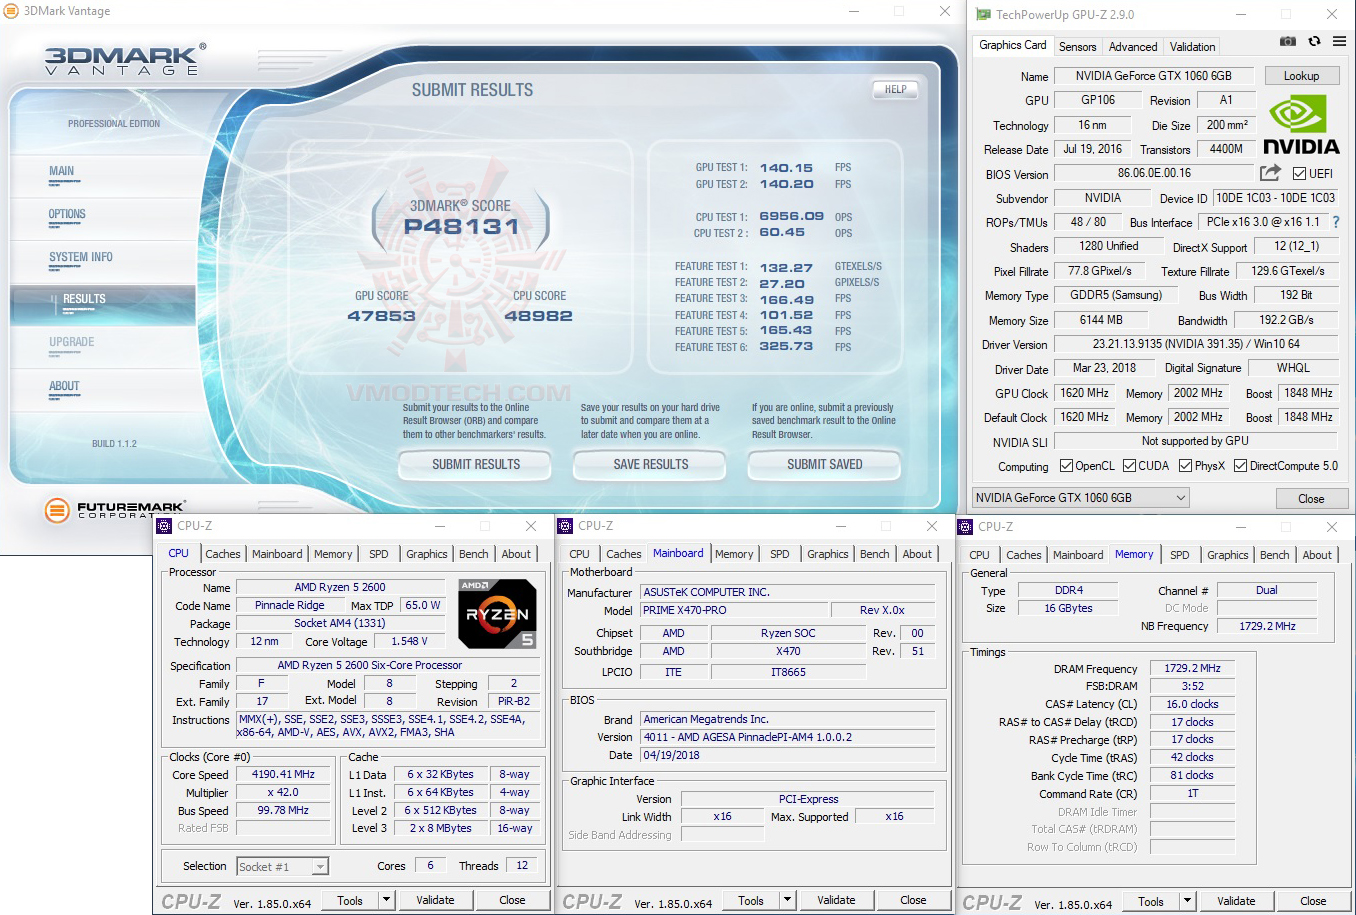 vt1 AMD RYZEN 5 2600 PROCESSOR REVIEW